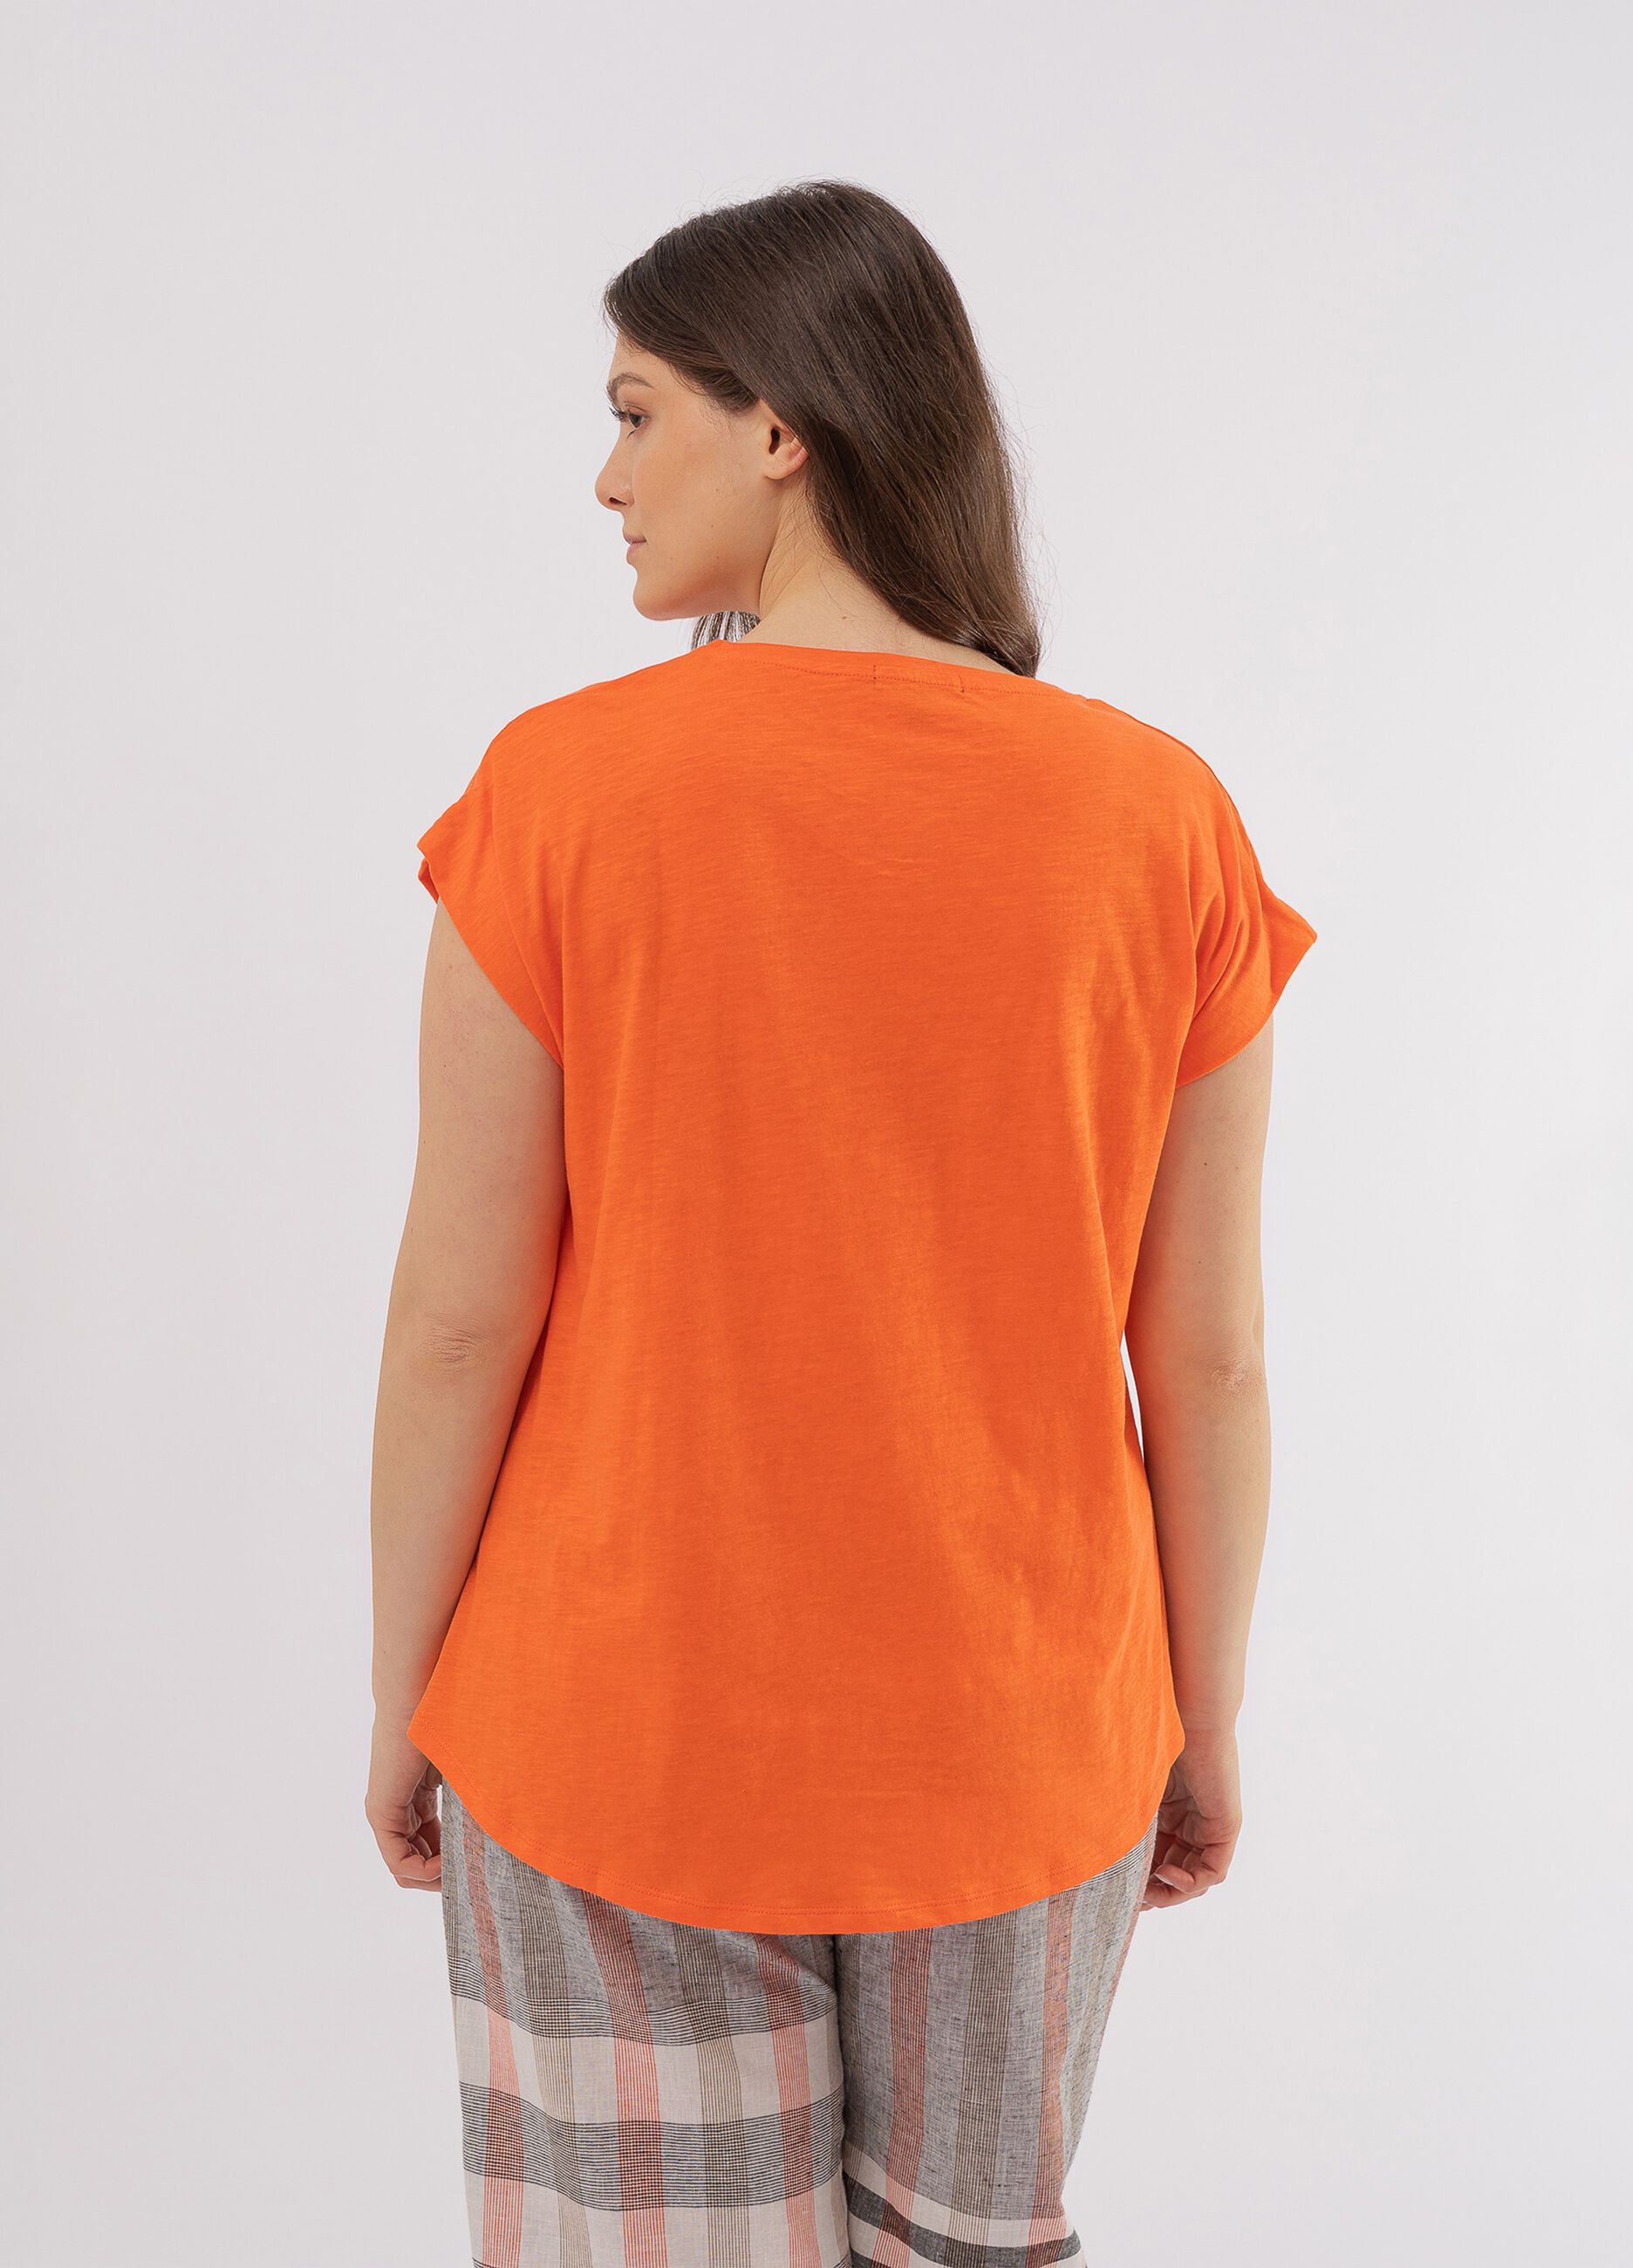 Curvy slub cotton T-shirt with V neck